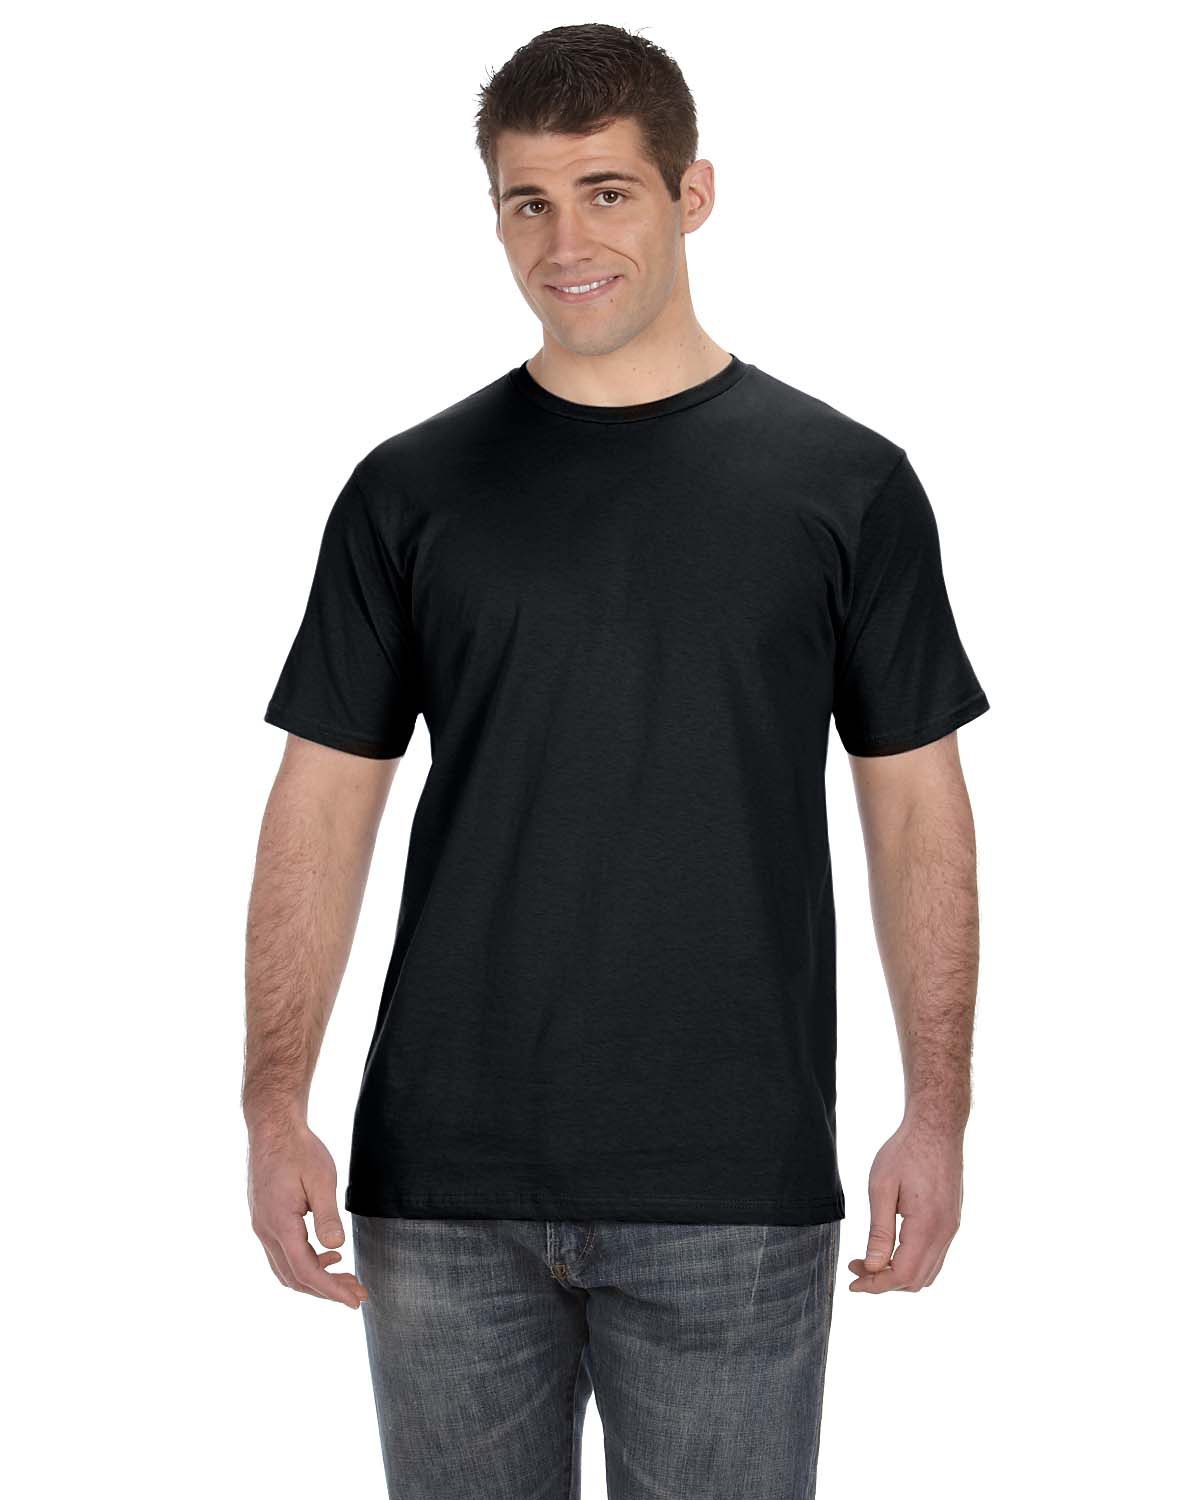 Anvil OR420 Lightweight T-Shirt $5.95 - Men's T-Shirts